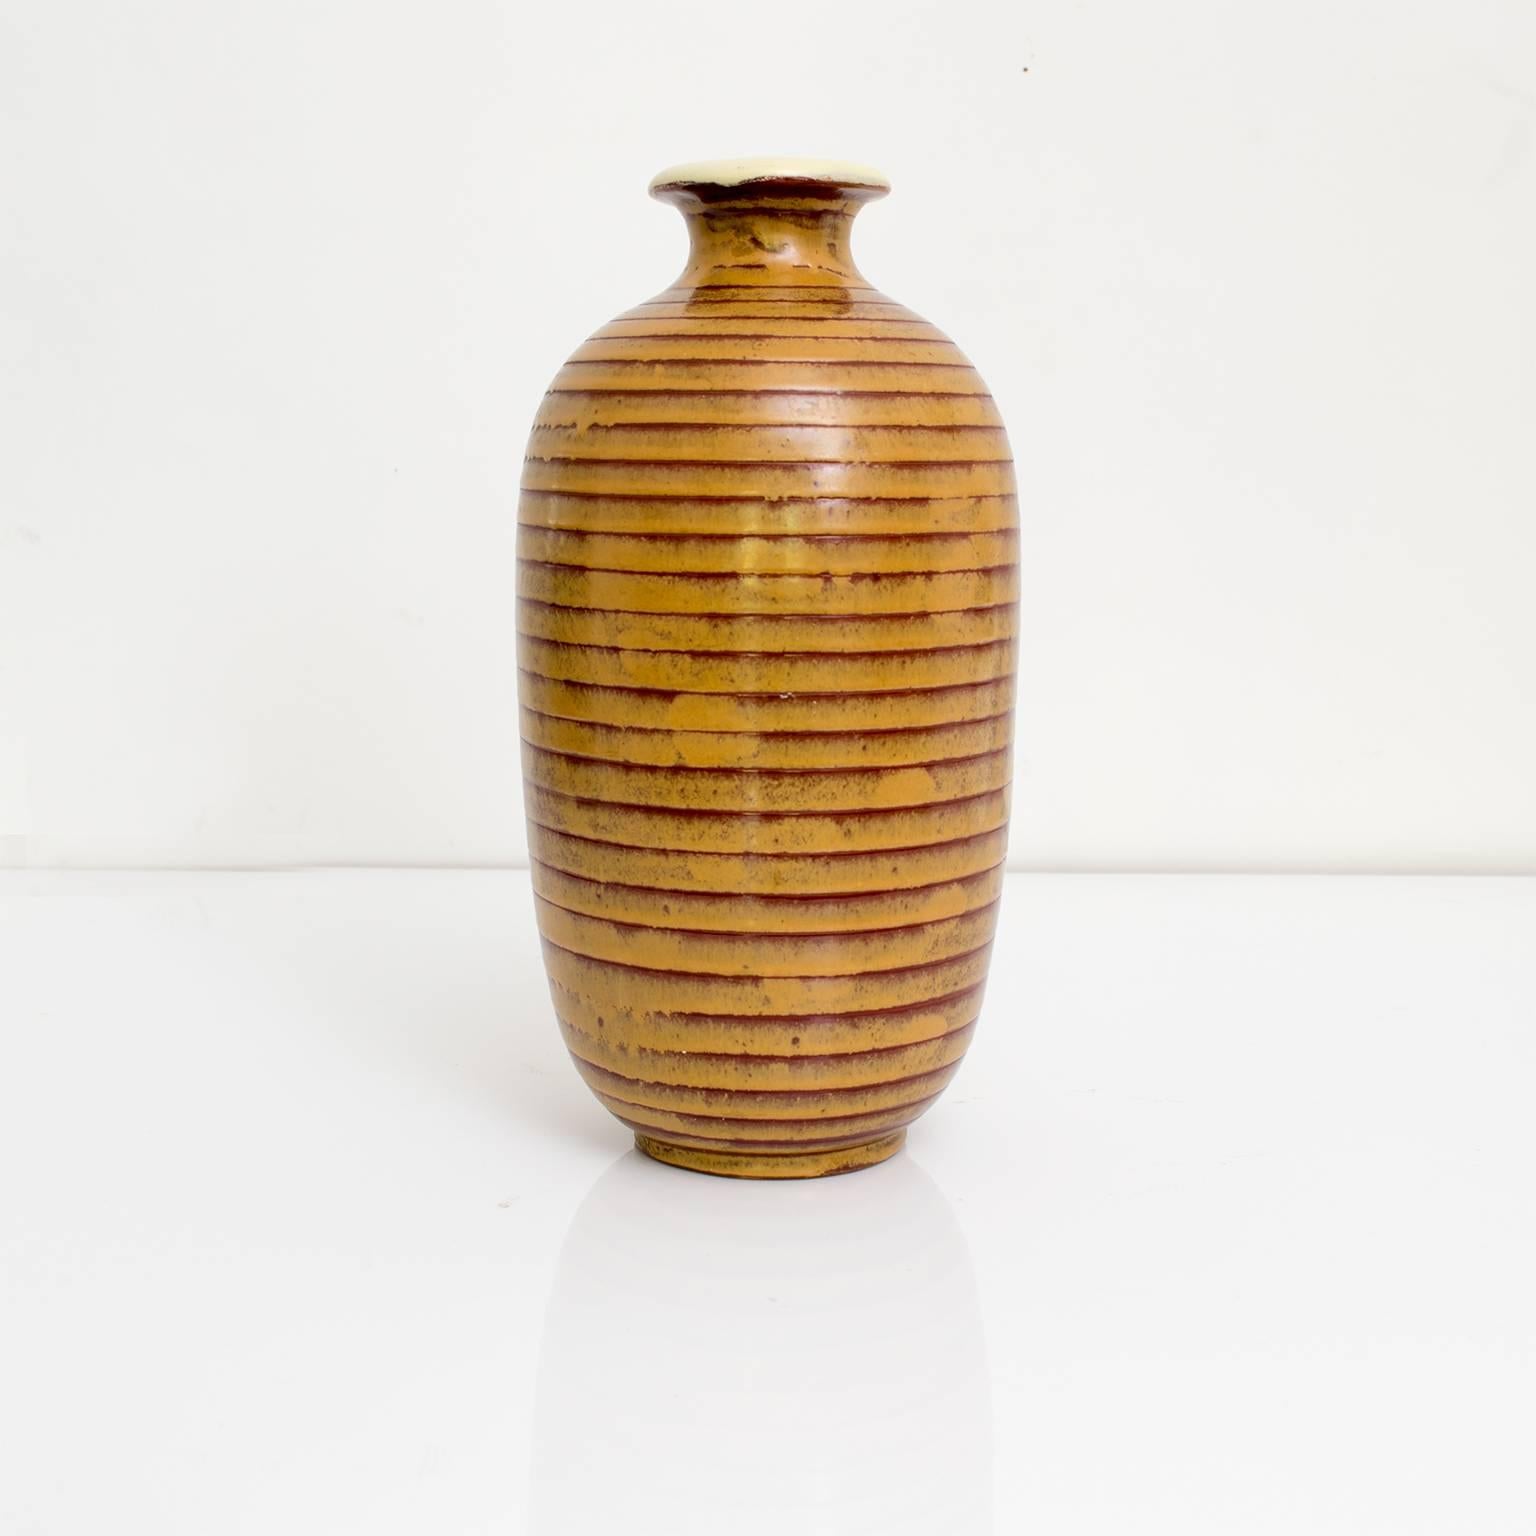 Scandinavian Modern Swedish Art Deco Ceramic Vase with Horizontal Lines Made by Anna-Lisa Thomson